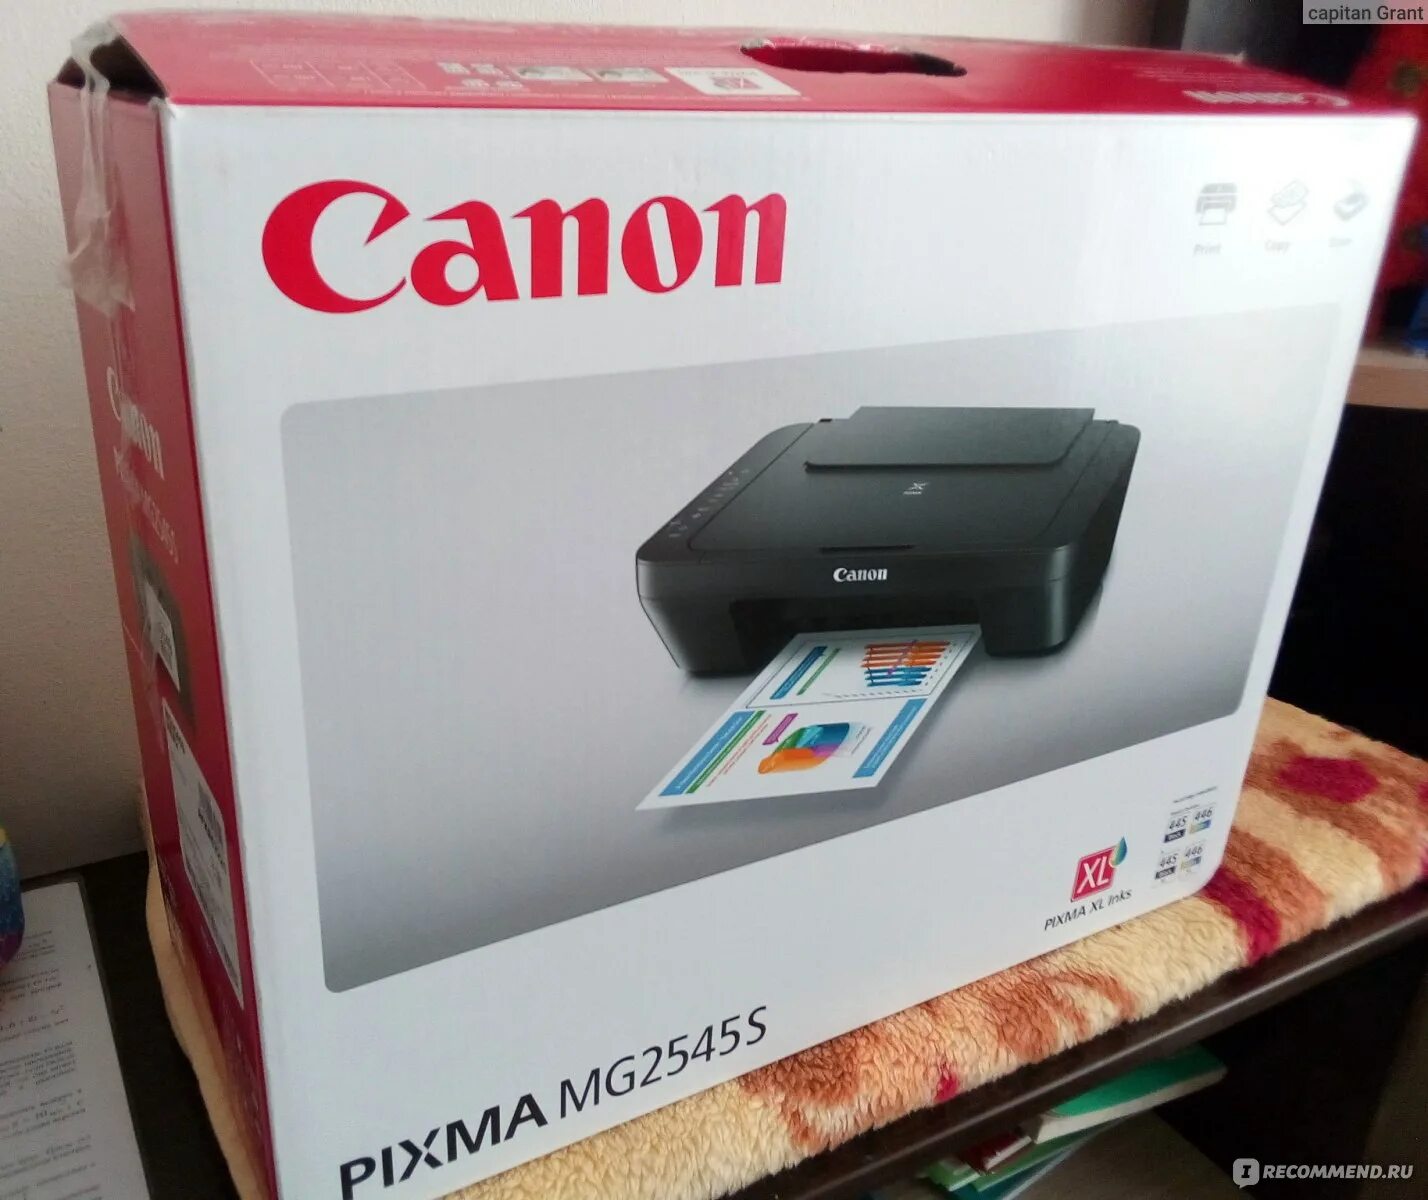 Canon mg2545s. Canon PIXMA mg2545s. Принтер Кэнон 2545s. Canon 2540s. Canon mg2545s картридж